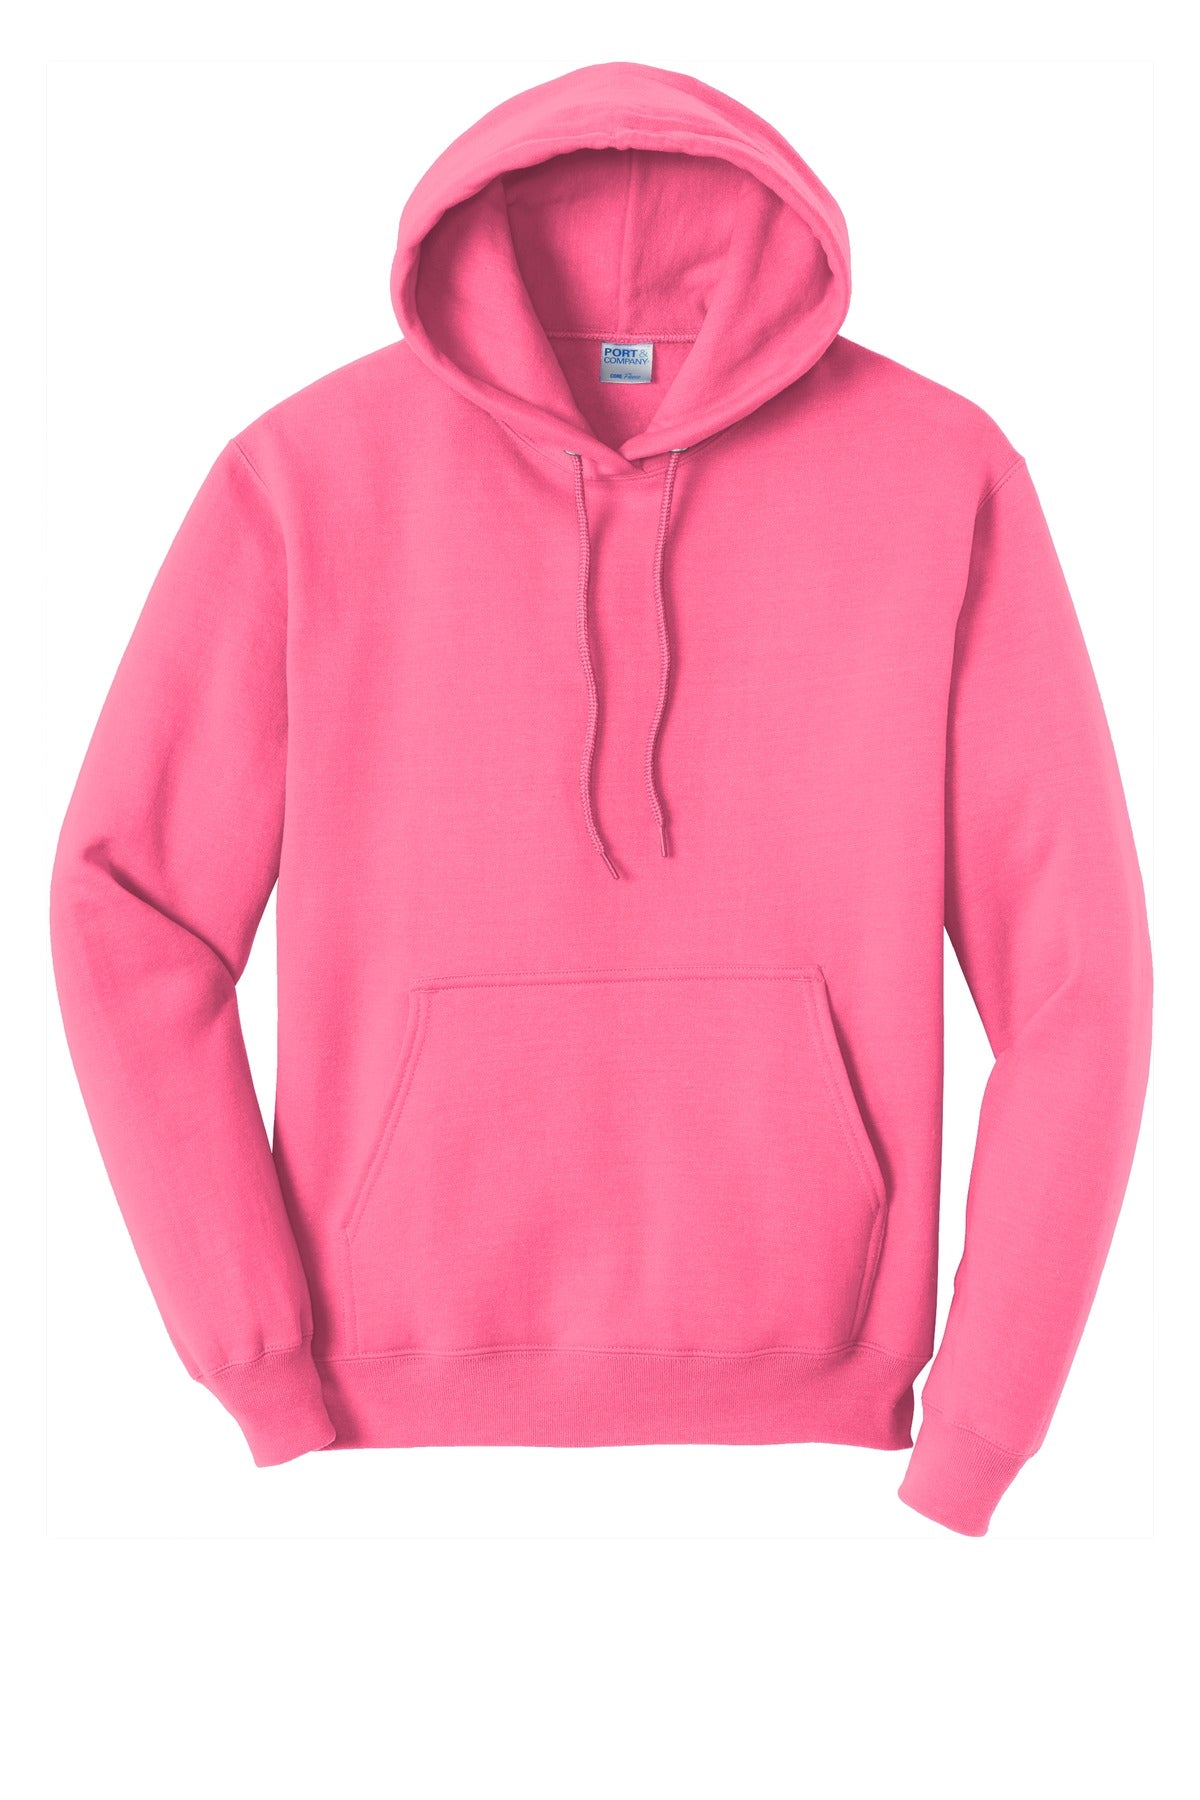 Port & Company - Core Fleece Pullover Hooded Sweatshirt. PC78H - Neon Pink